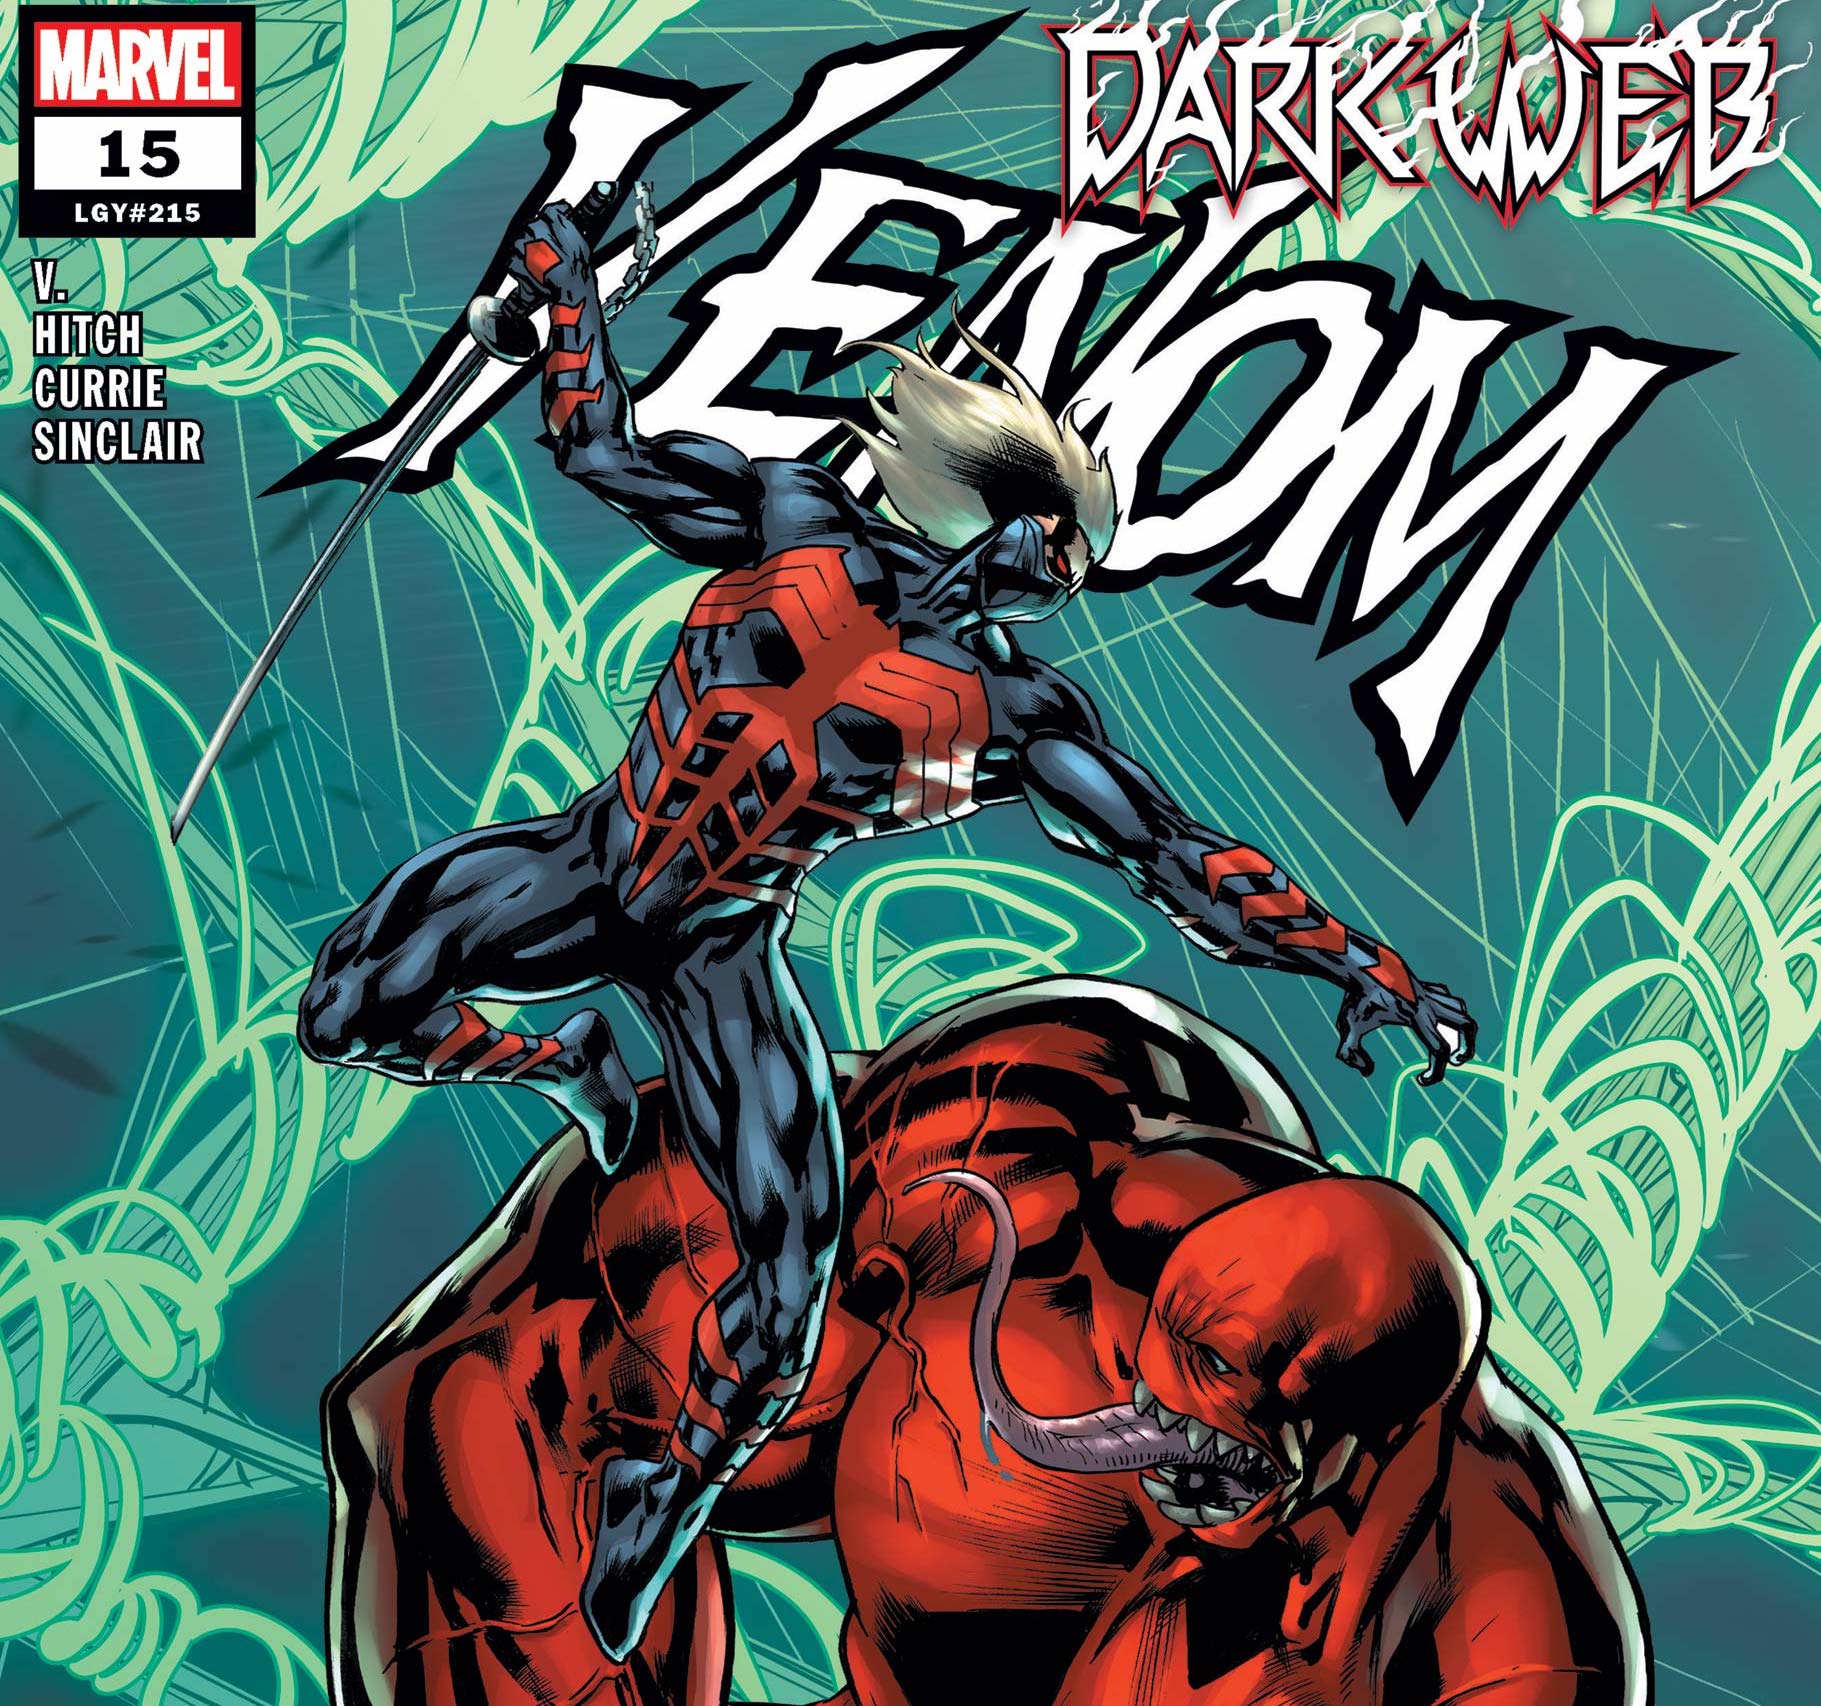 EXCLUSIVE Marvel Preview: Venom #15